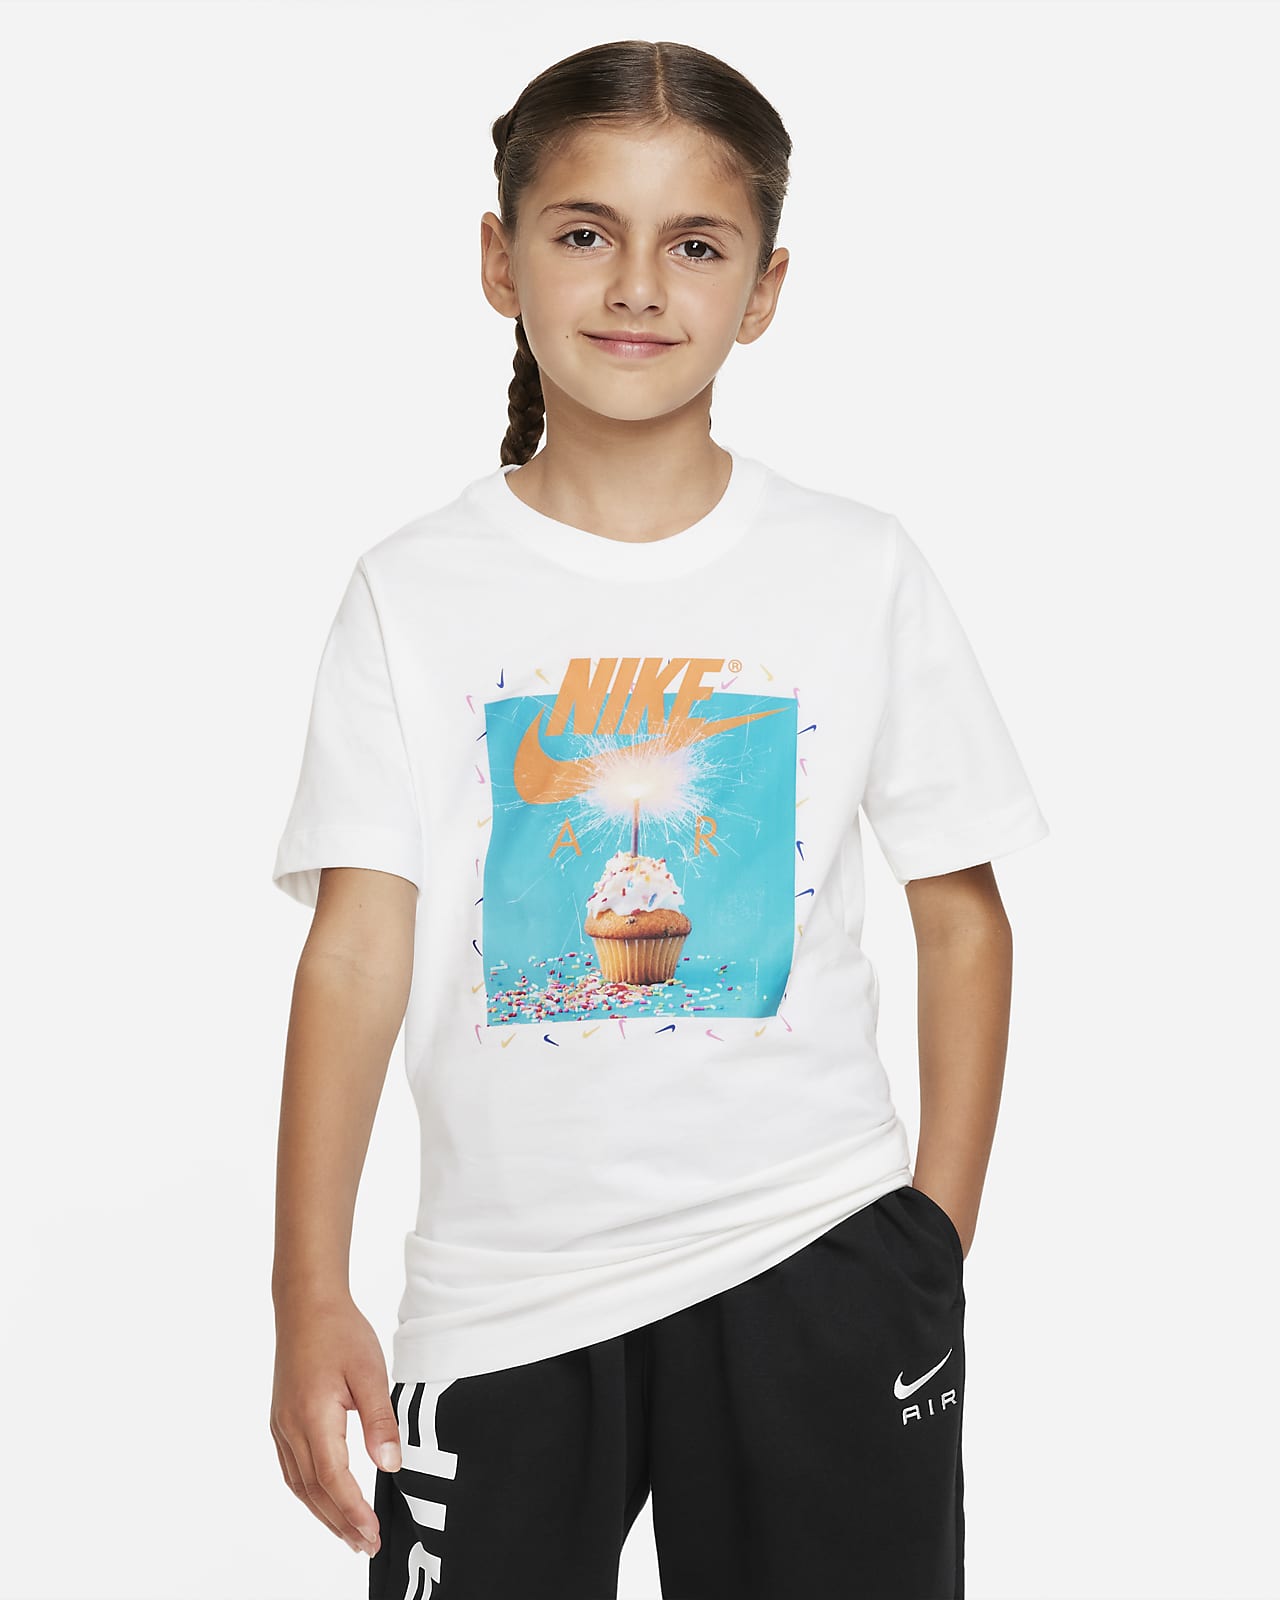 Bomulls-t-shirt Nike Sportswear för ungdom